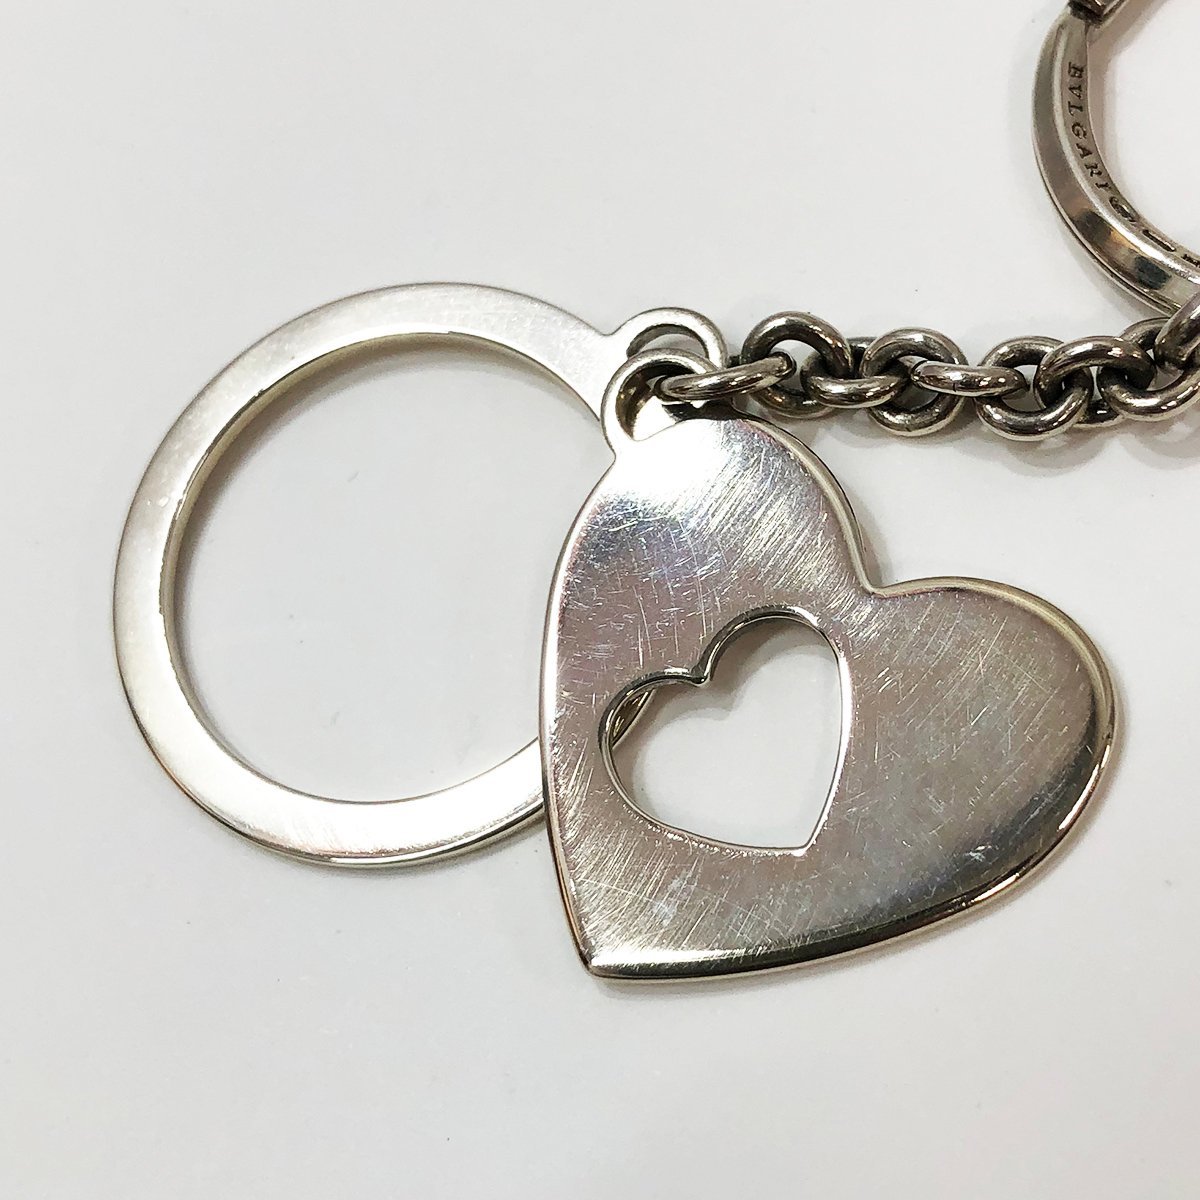  BVLGARY key ring Heart silver 925 key holder charm SV925 BVLGARI used *